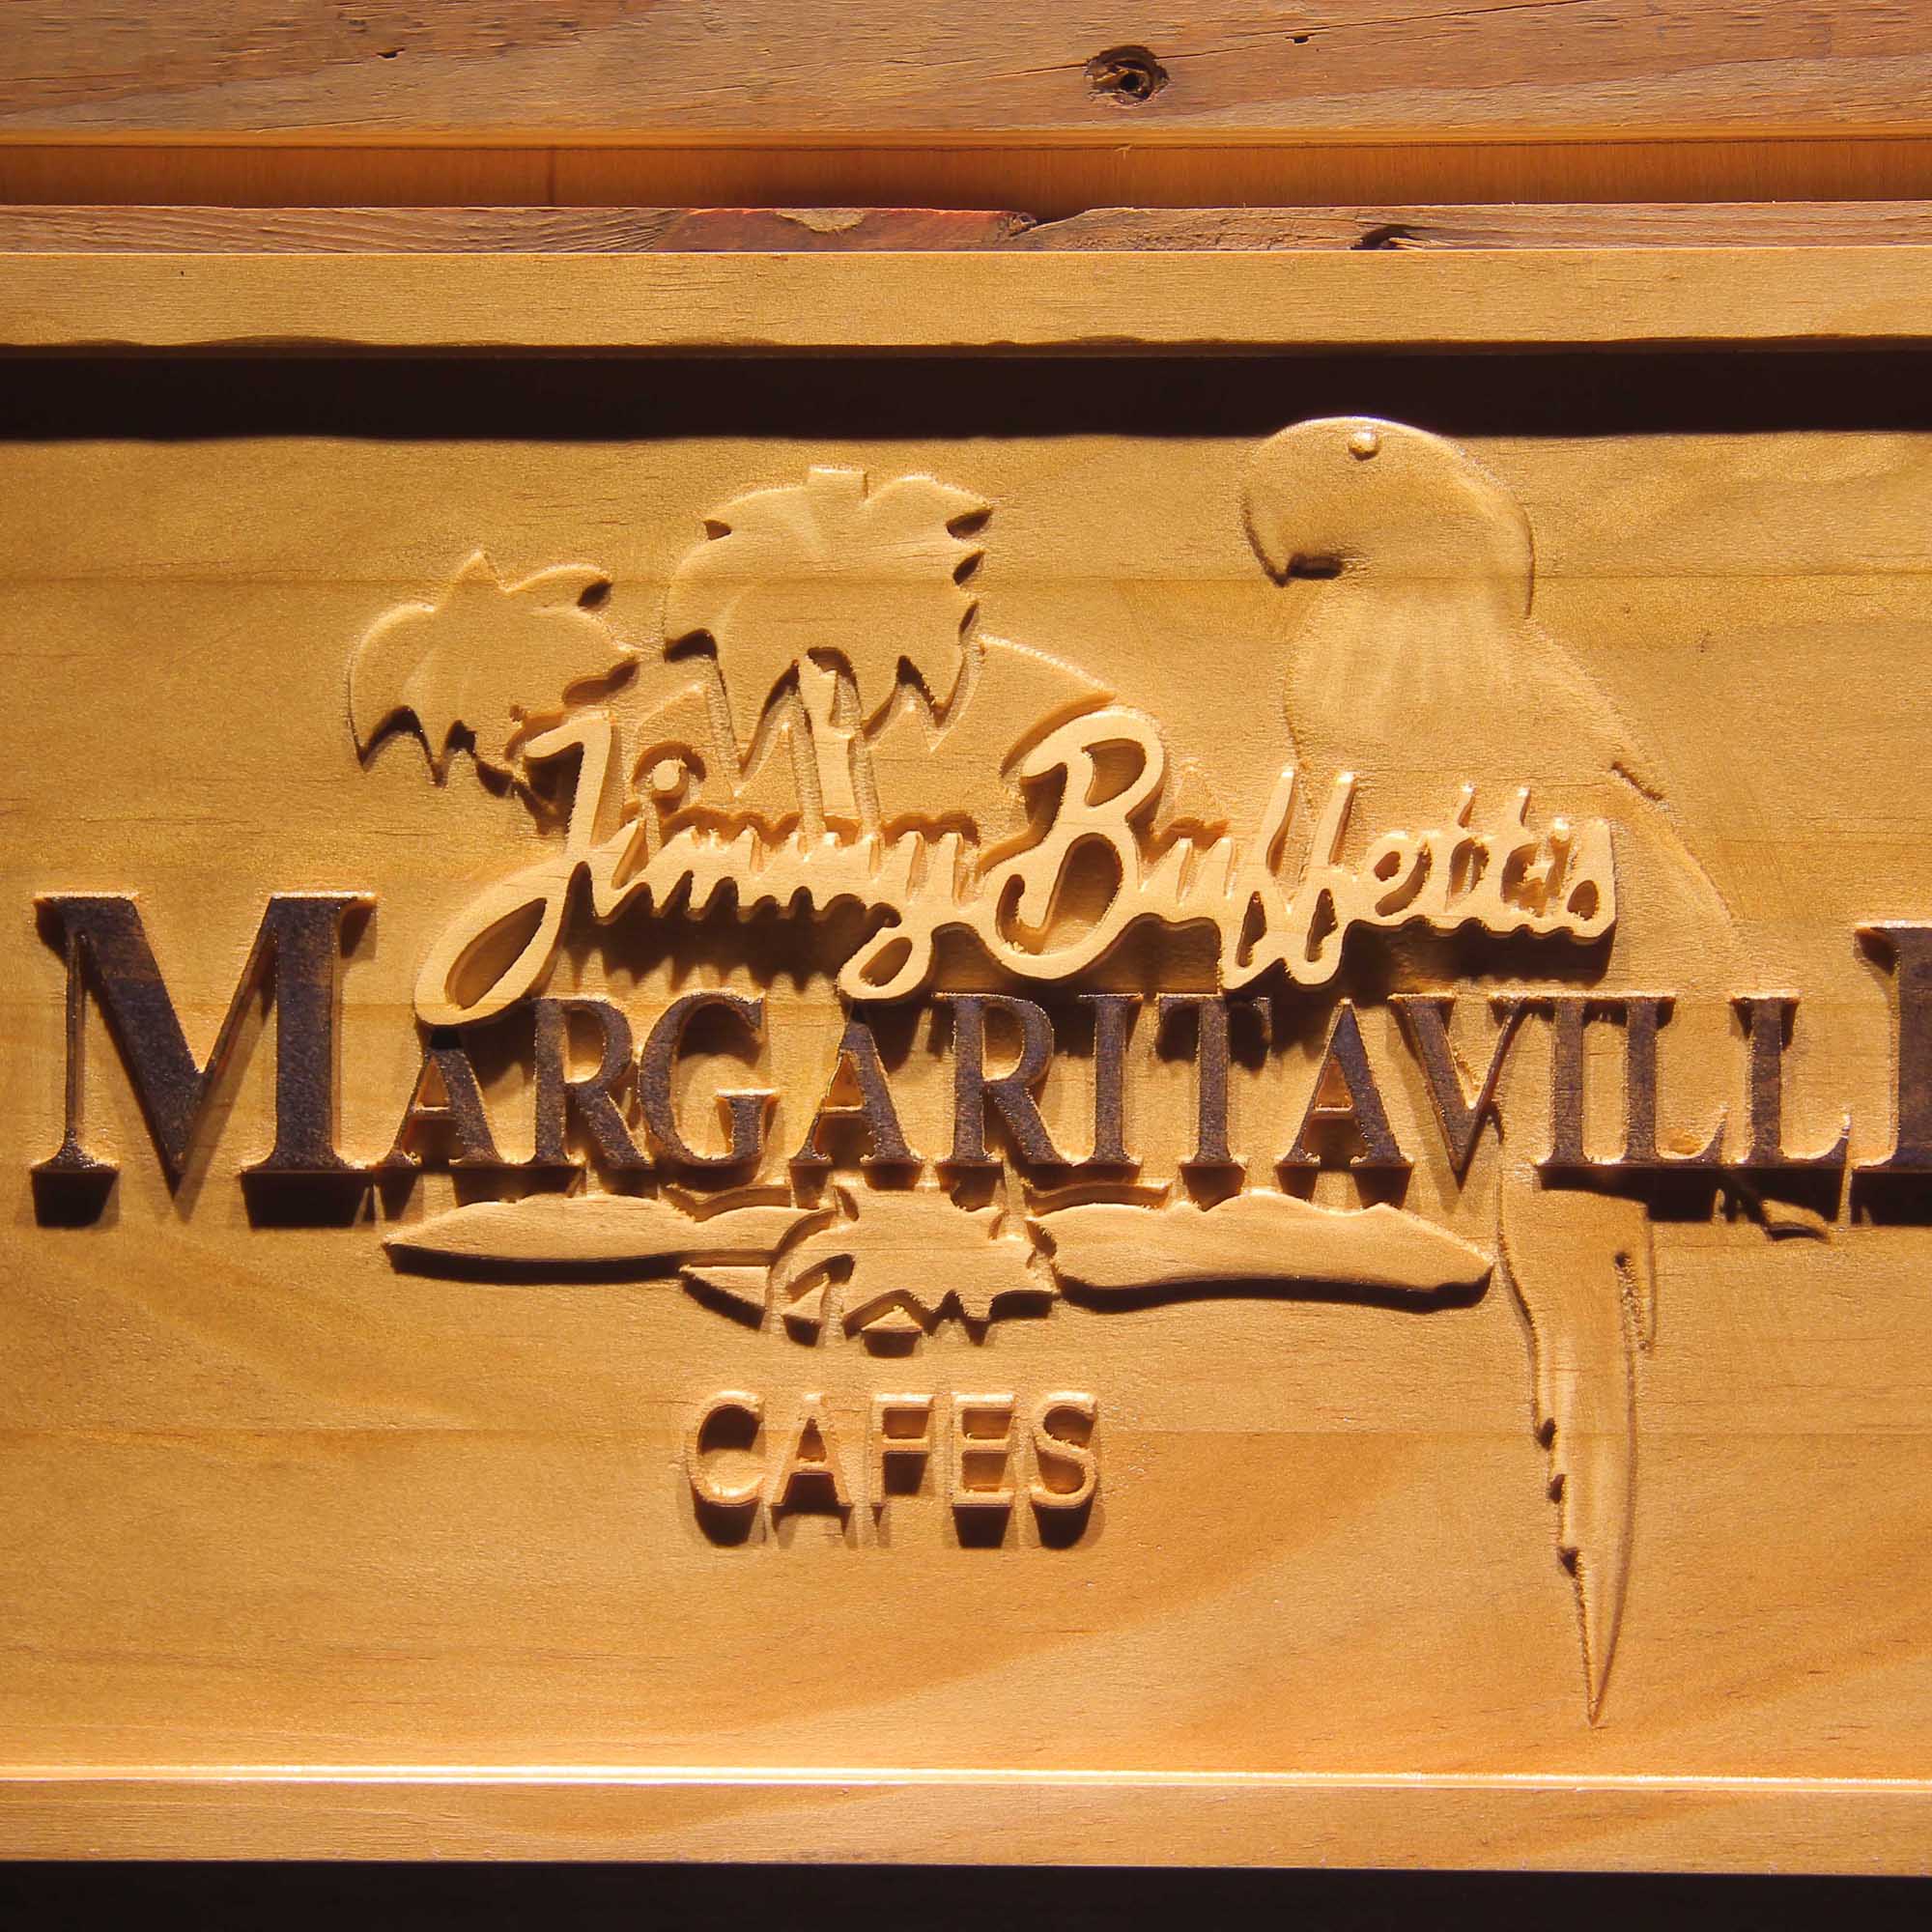 Jimmy Buffett's Margaritaville Caf茅 3D Wooden Engrave Sign